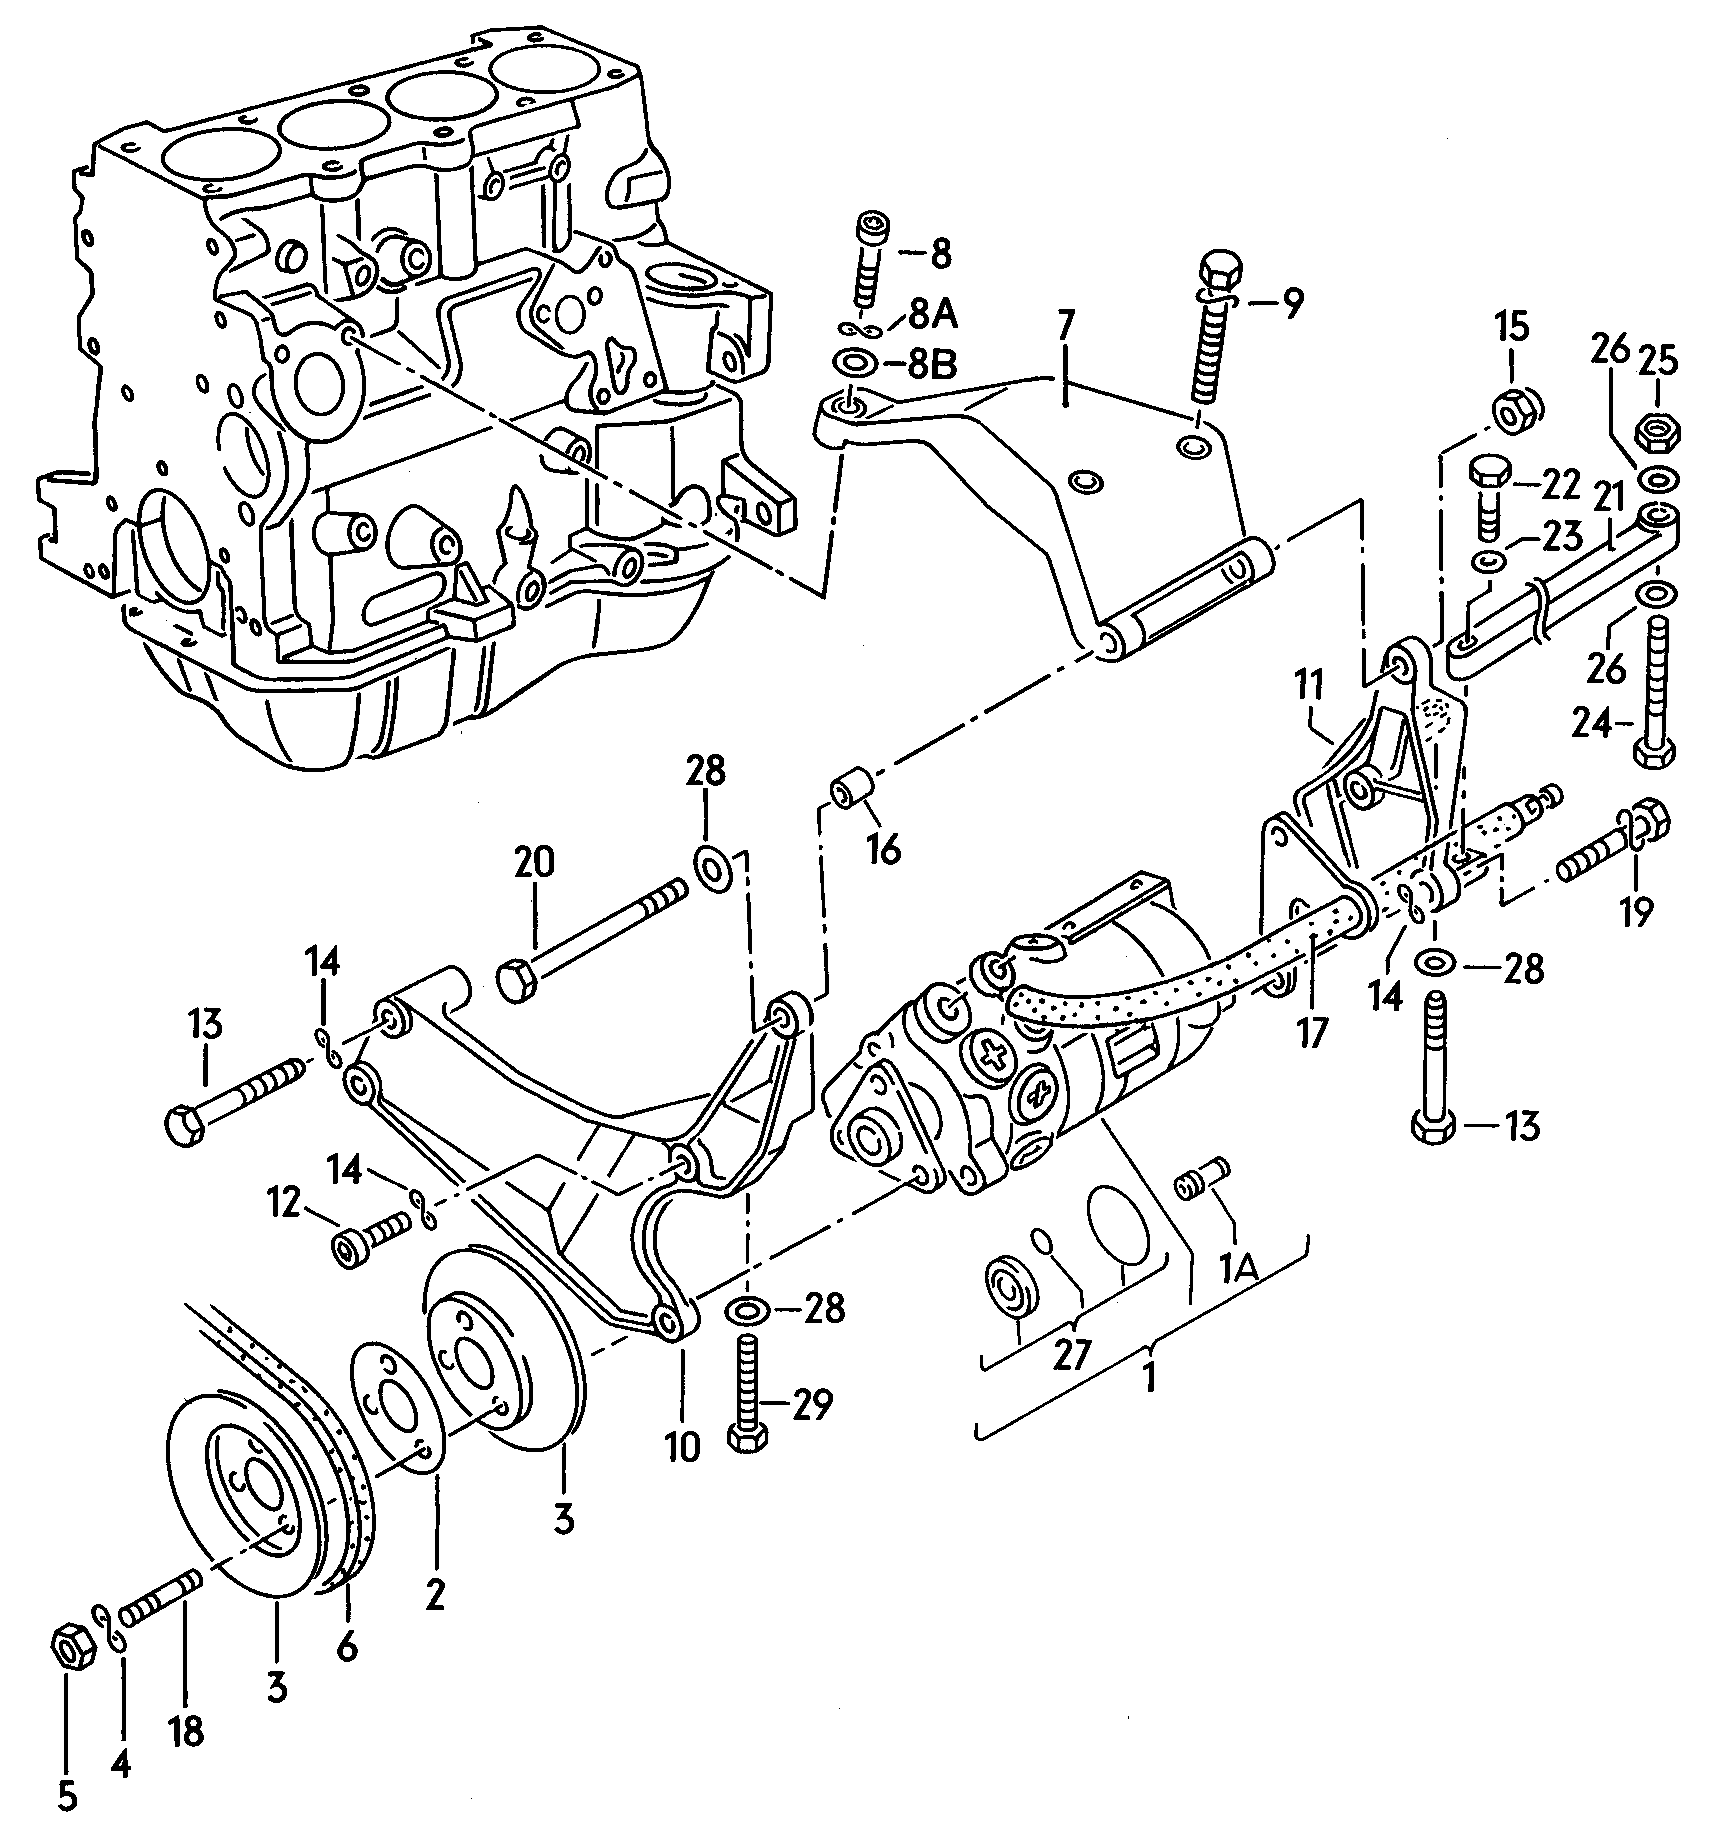 central hydraulic pumpfor power steering 1.8ltr. - Audi 5000 quattro - a50q